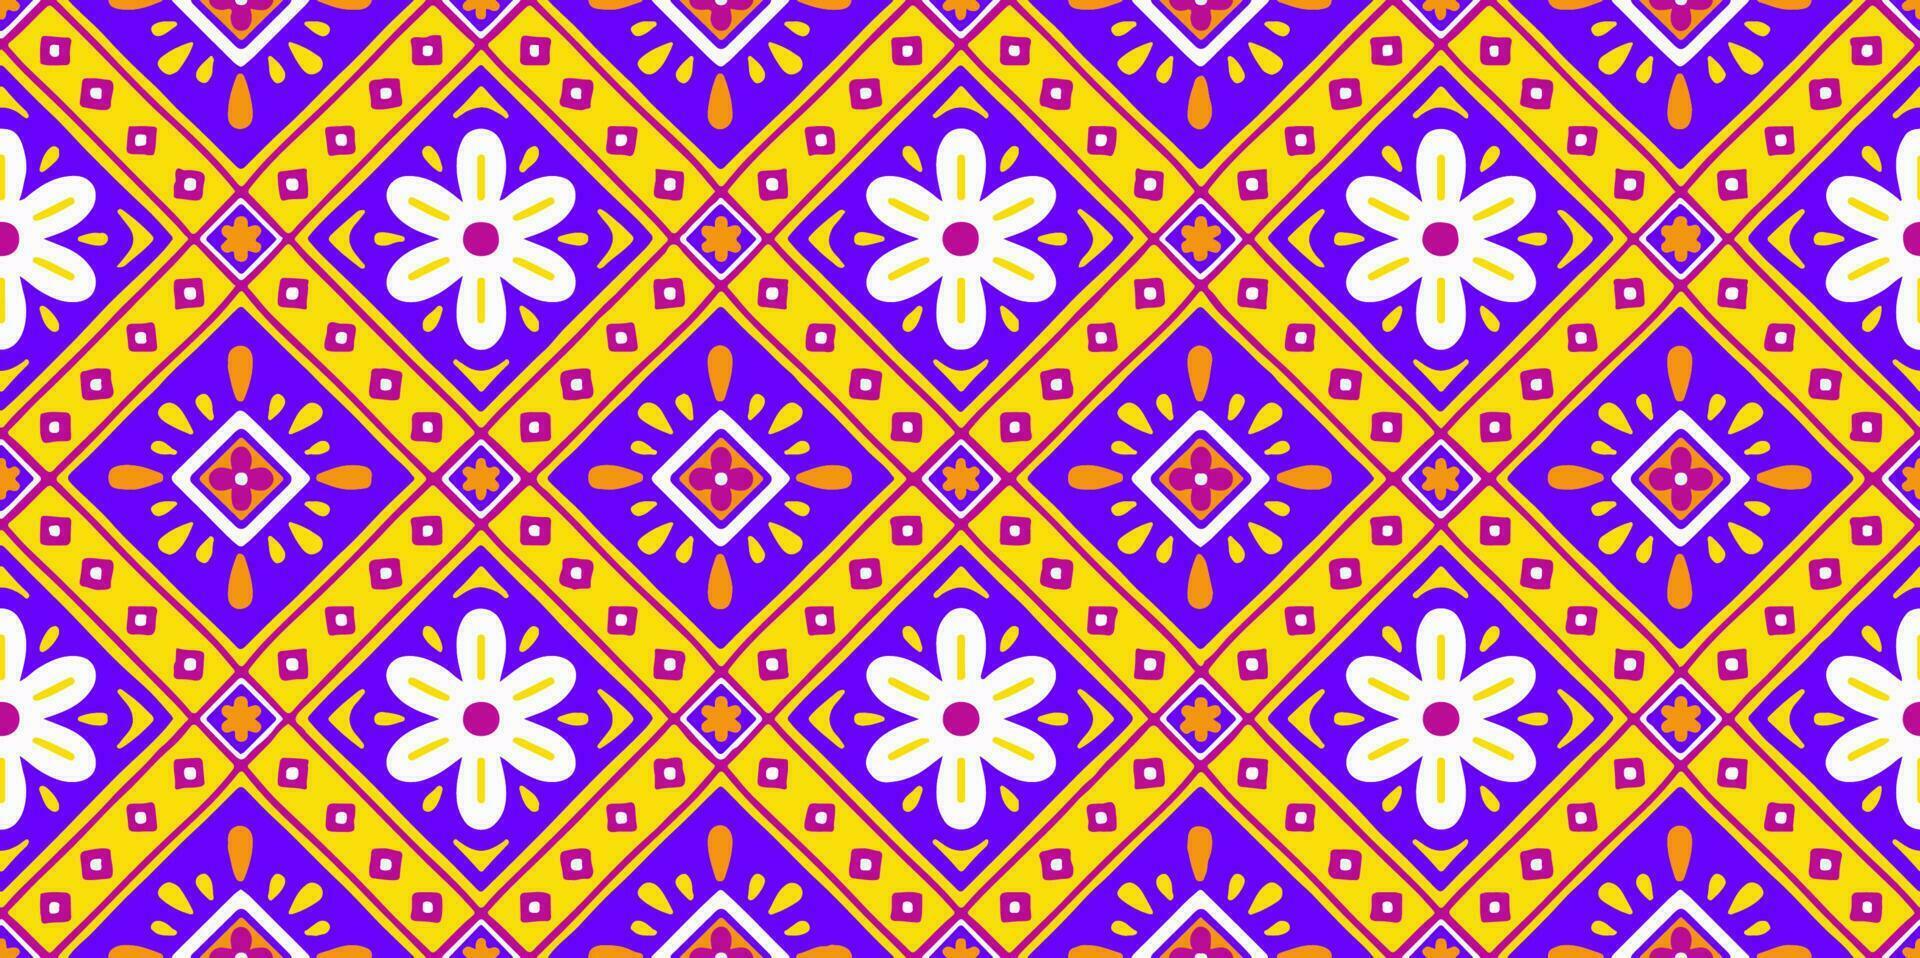 Ethnic Abstract Background cute Yellow Violet Daisy Flower geometric tribal folk Motif oriental native pattern traditional design carpet wallpaper clothing fabric wrapping print batik folk vector